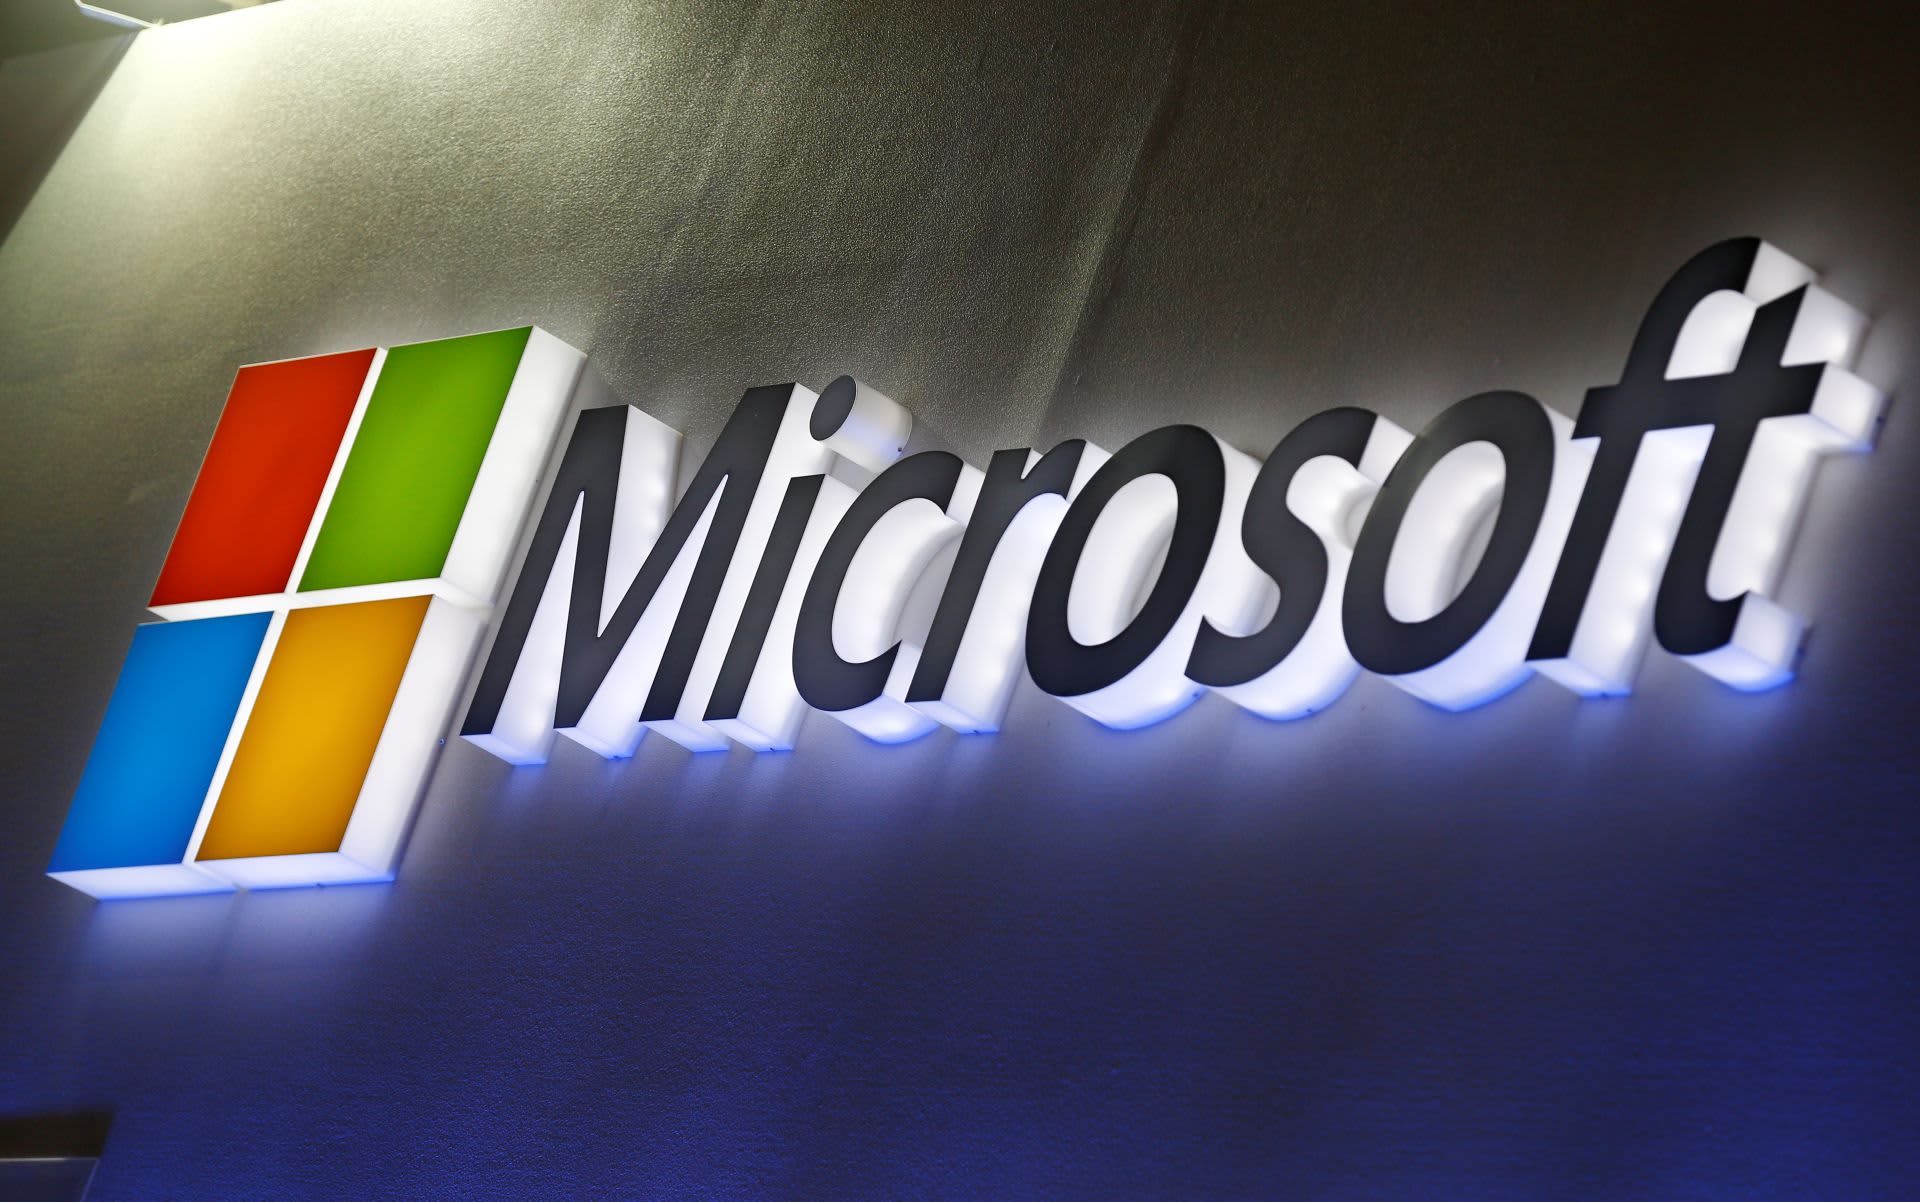 The Microsoft Windows logo